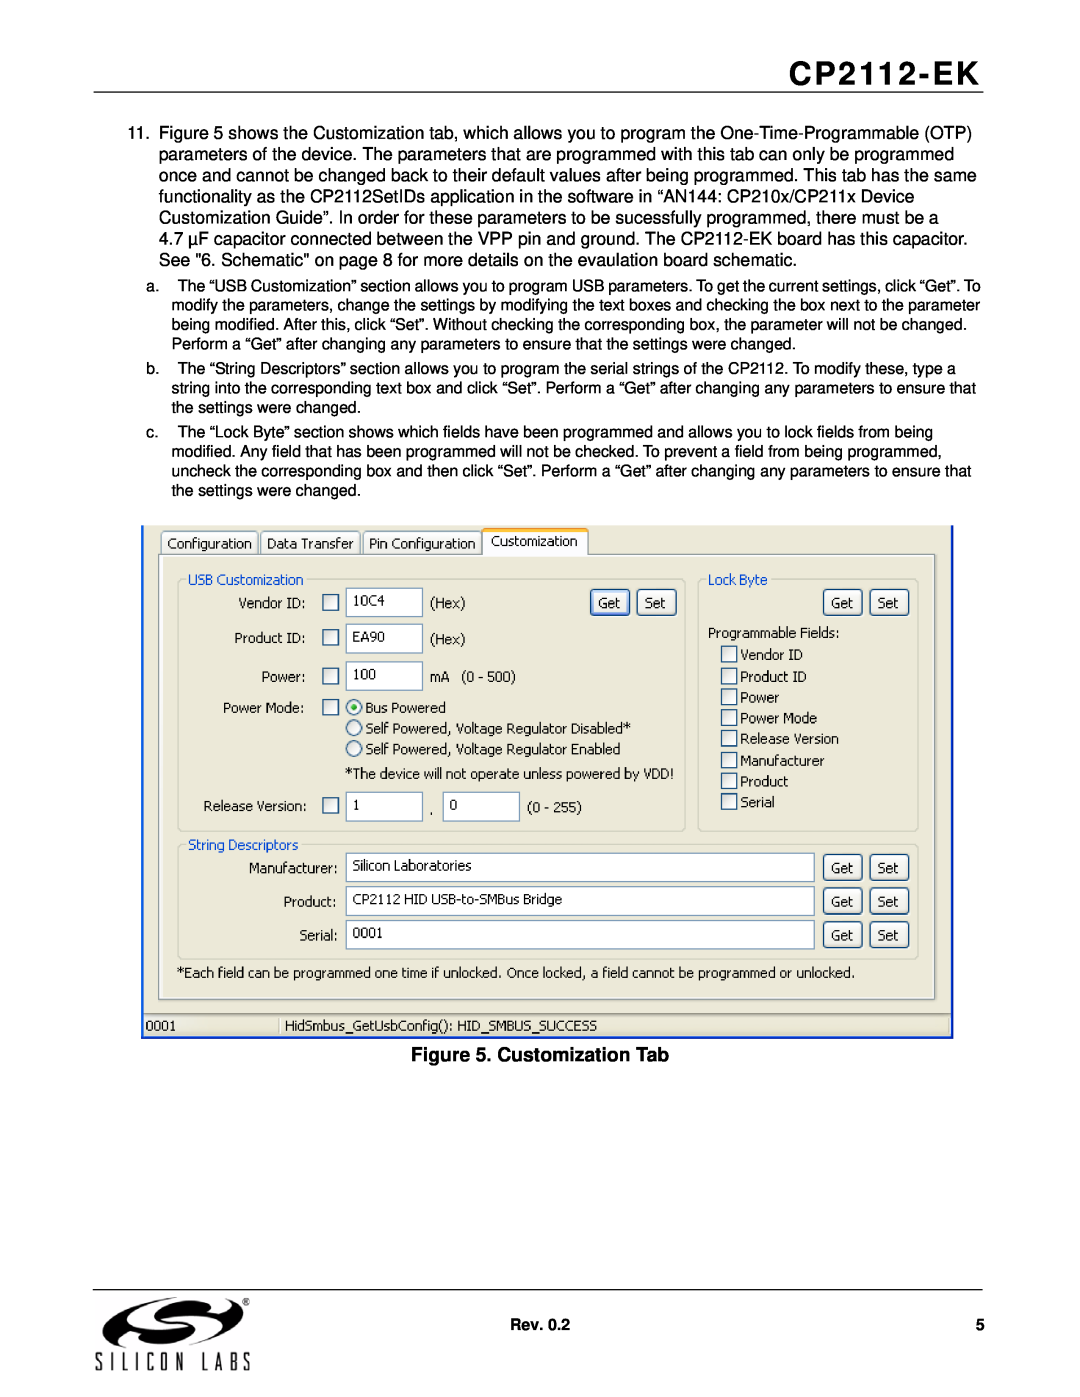 Silicon Laboratories CP2112-EK manual Customization Tab 